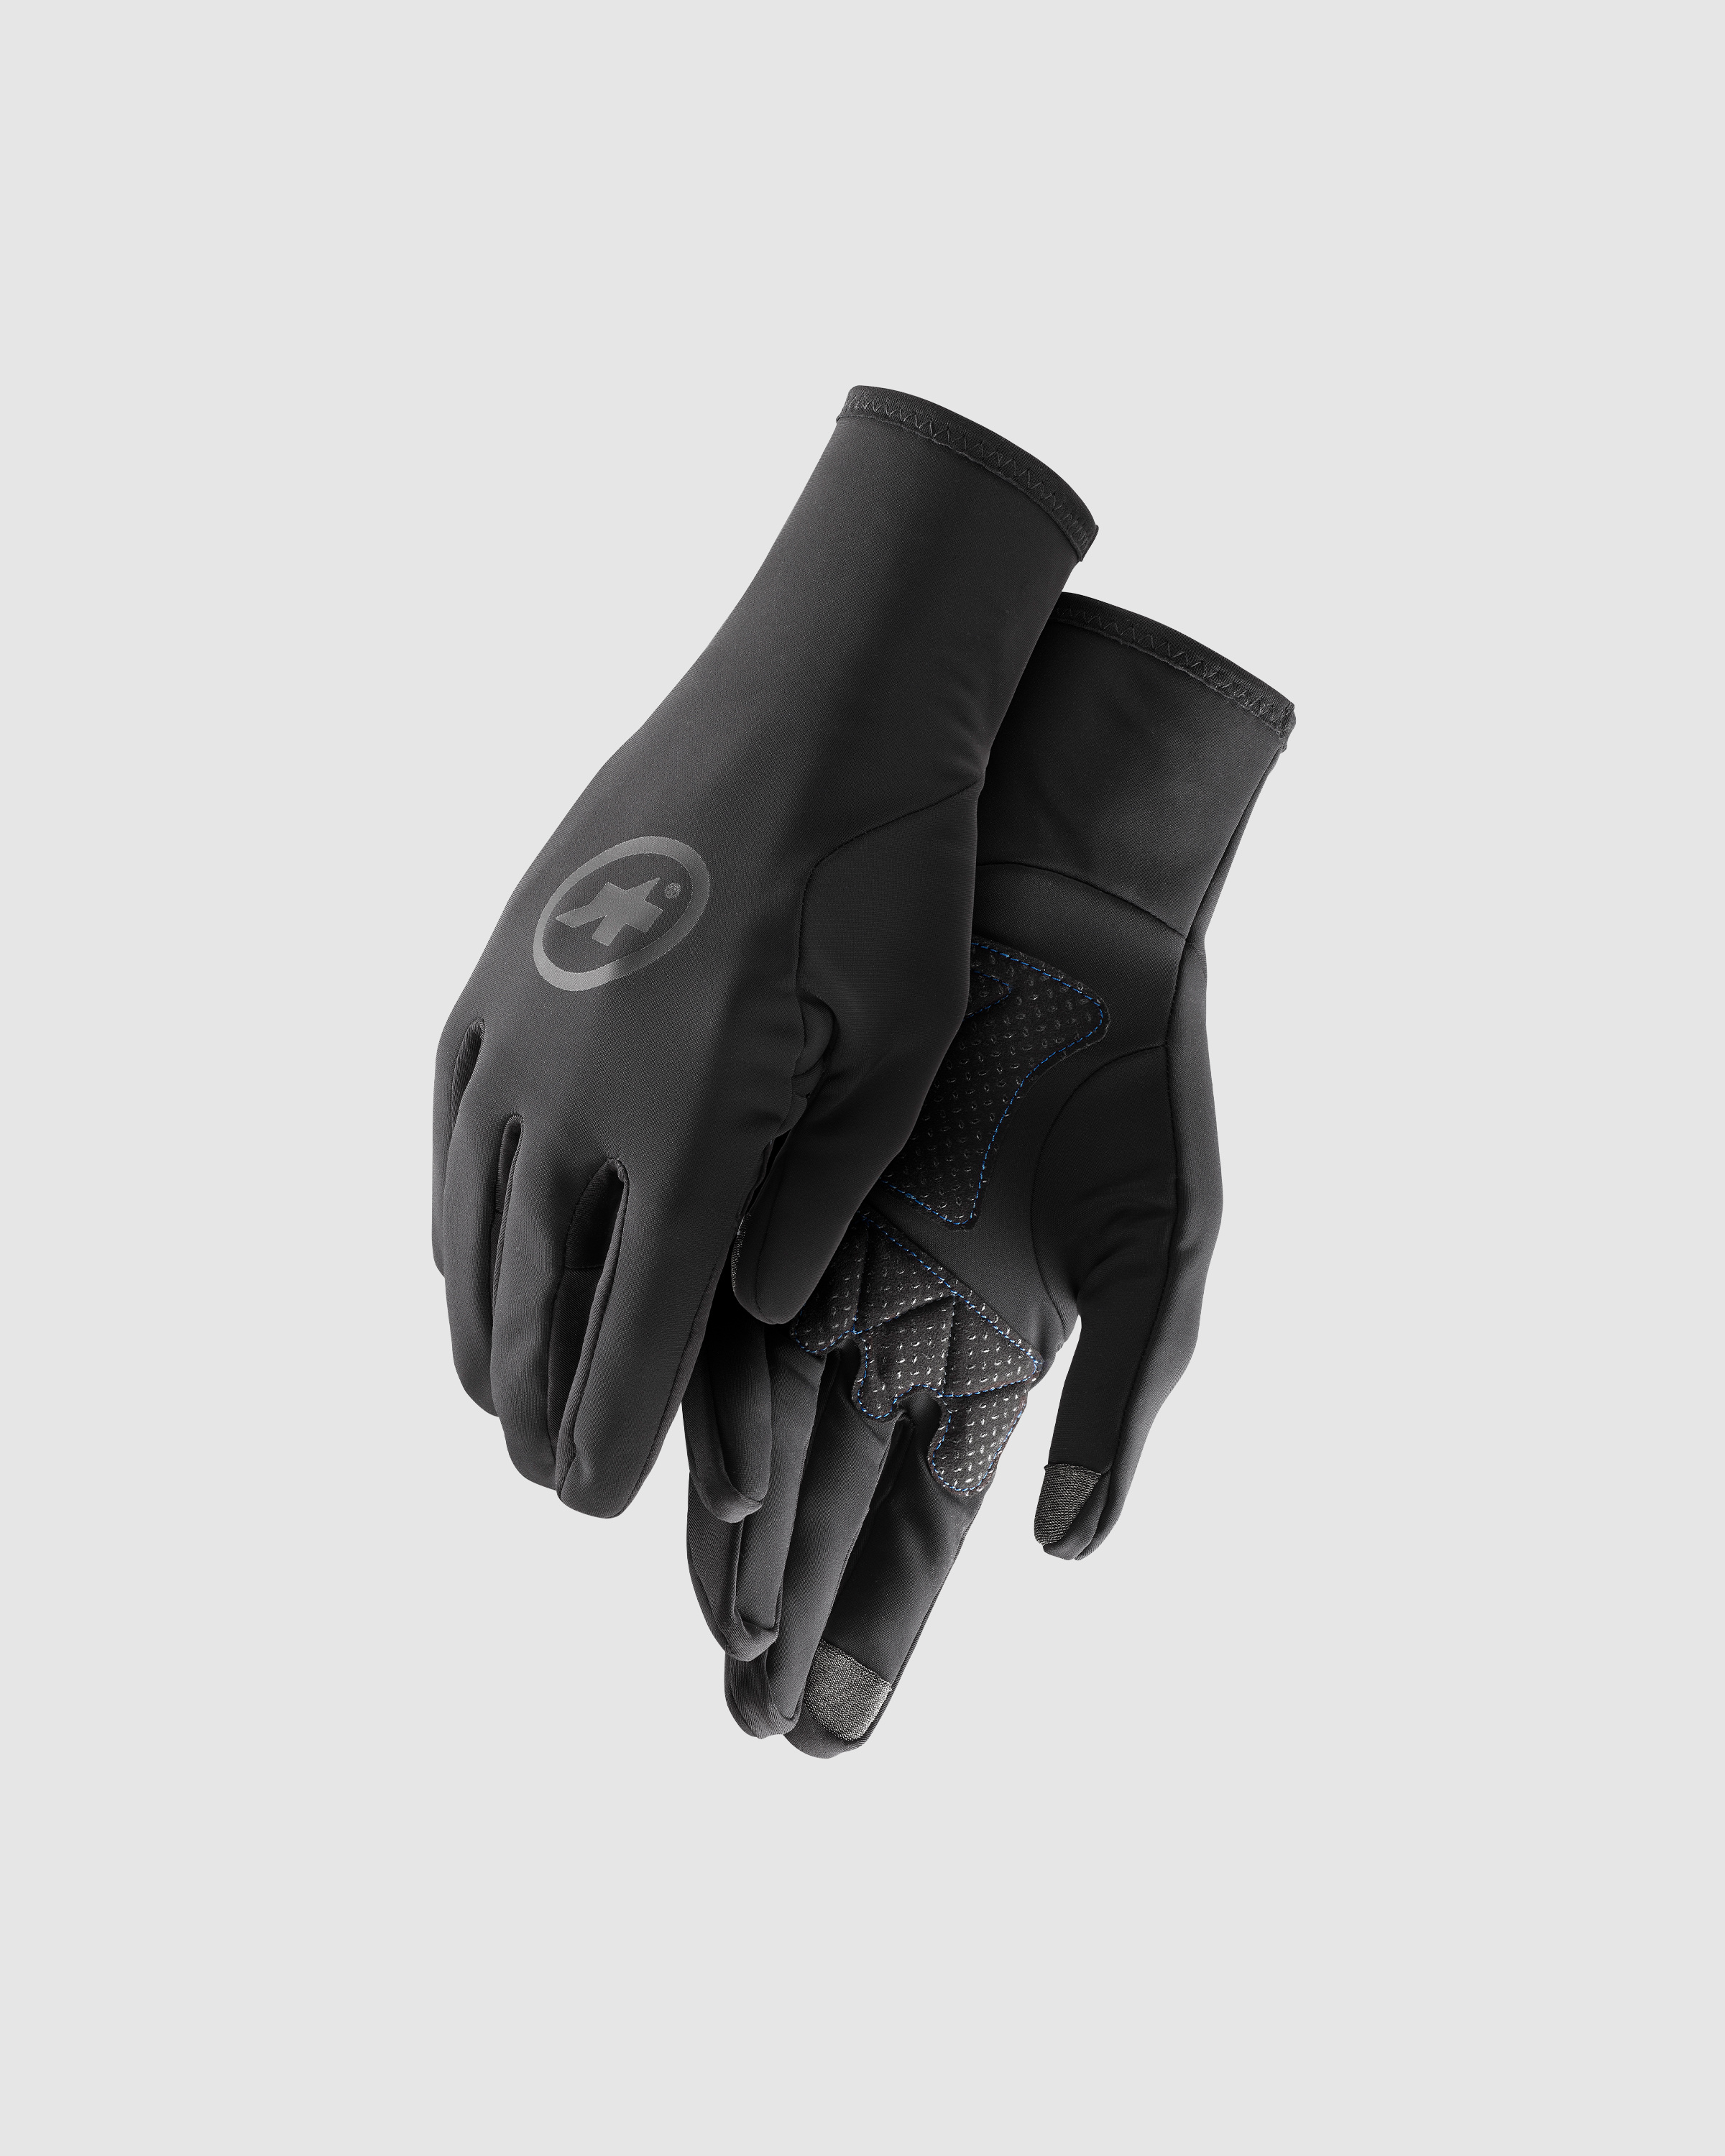 EVO, blackSeries » Winter Gloves Switzerland ASSOS Of